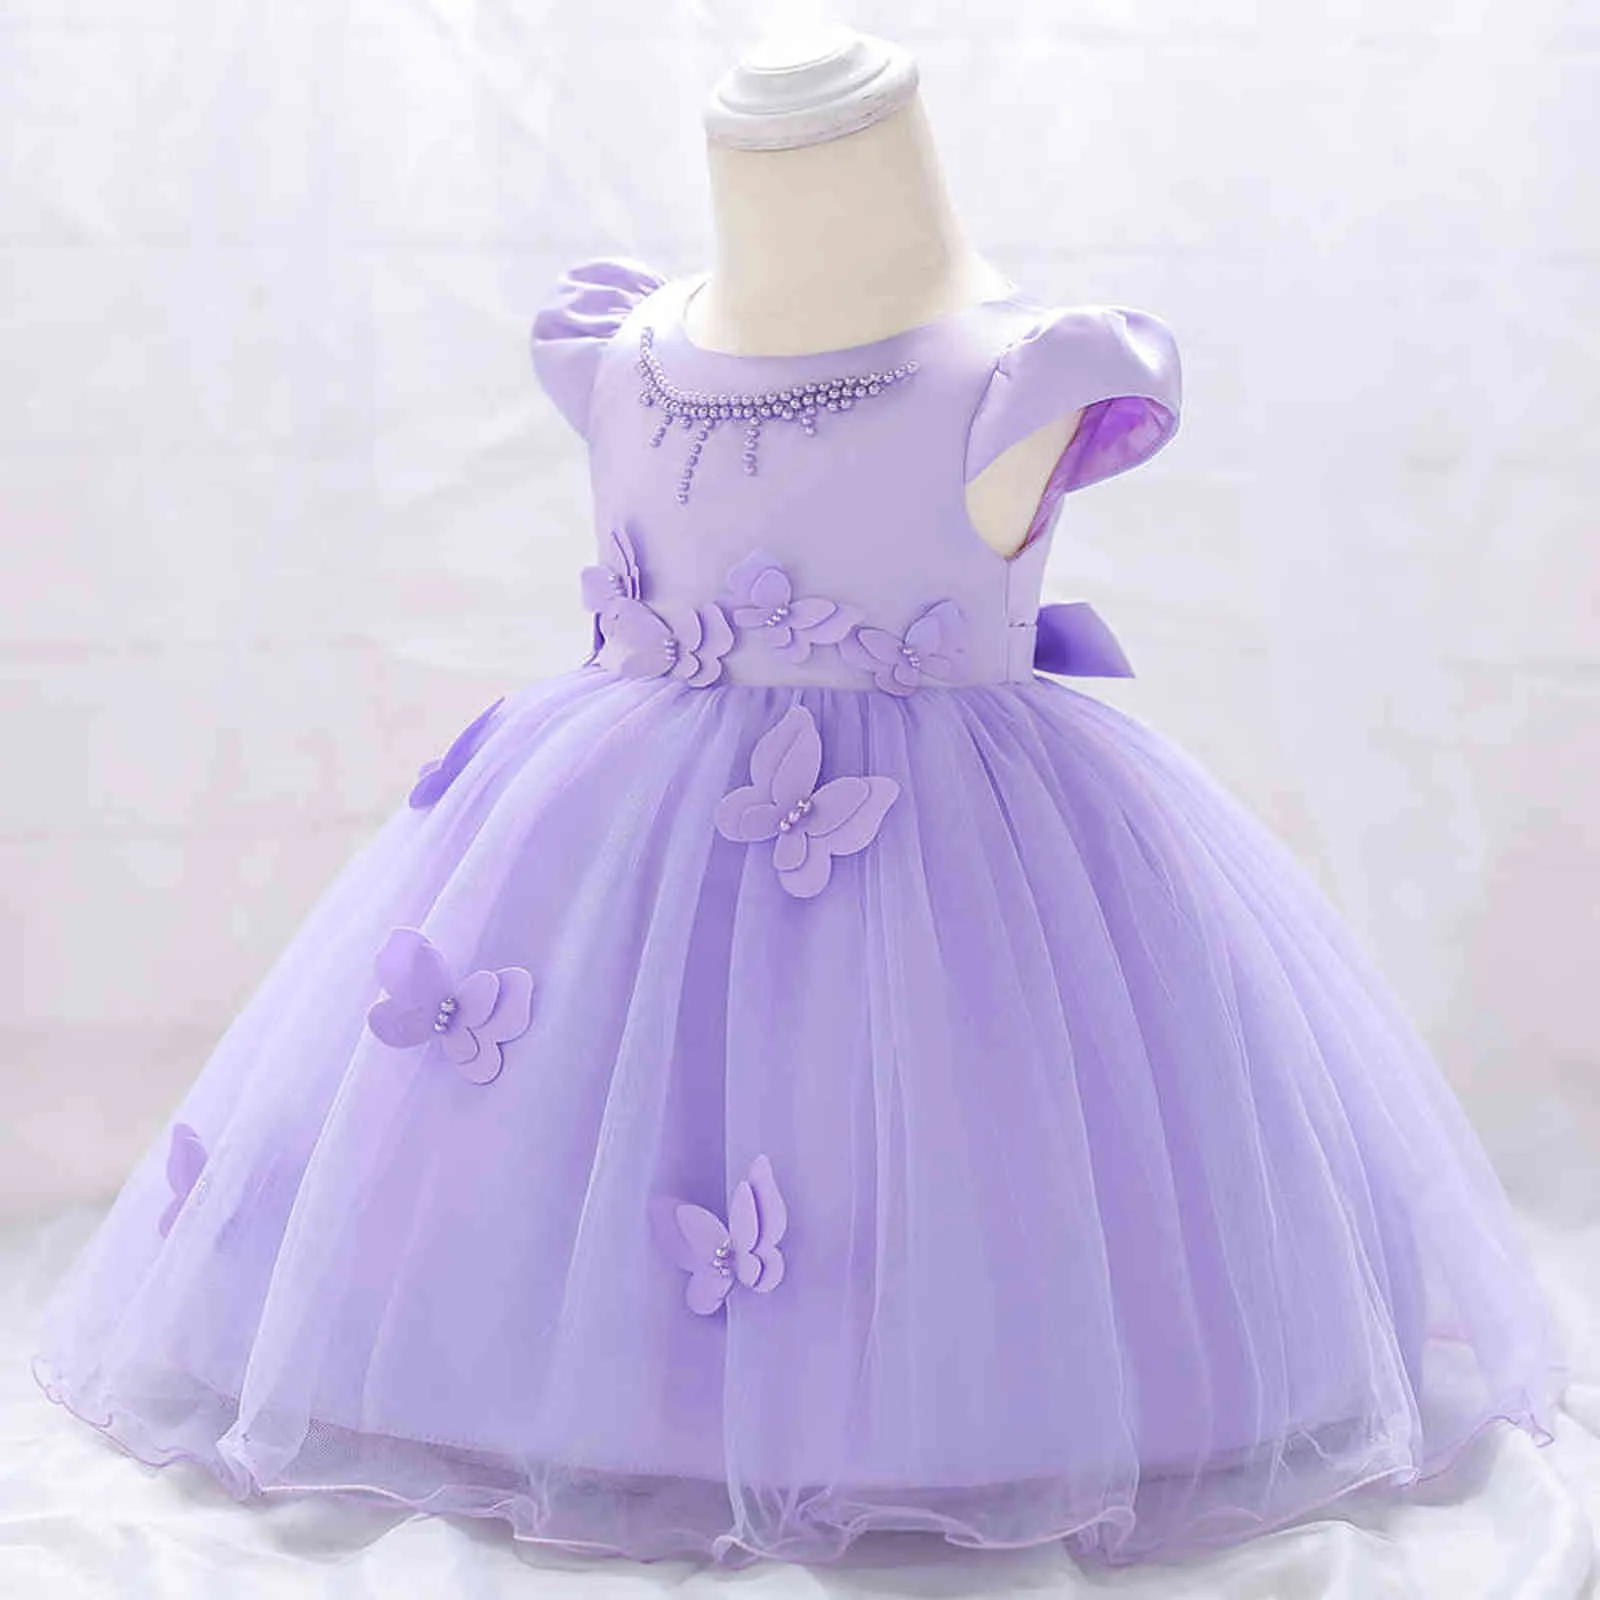 Bebê borboleta borbolista vestido vestido de aniversário para 1 ano bebê menina roupa casamento casamento dama de honra princesa vestido vestidos g1129